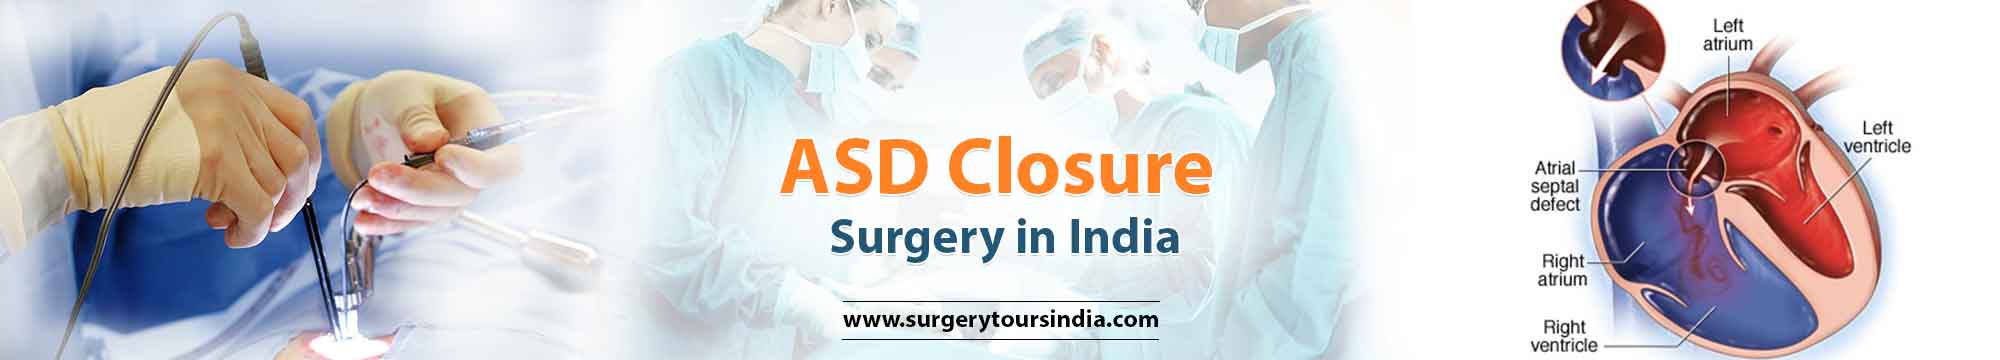 ASD Closure Surgery